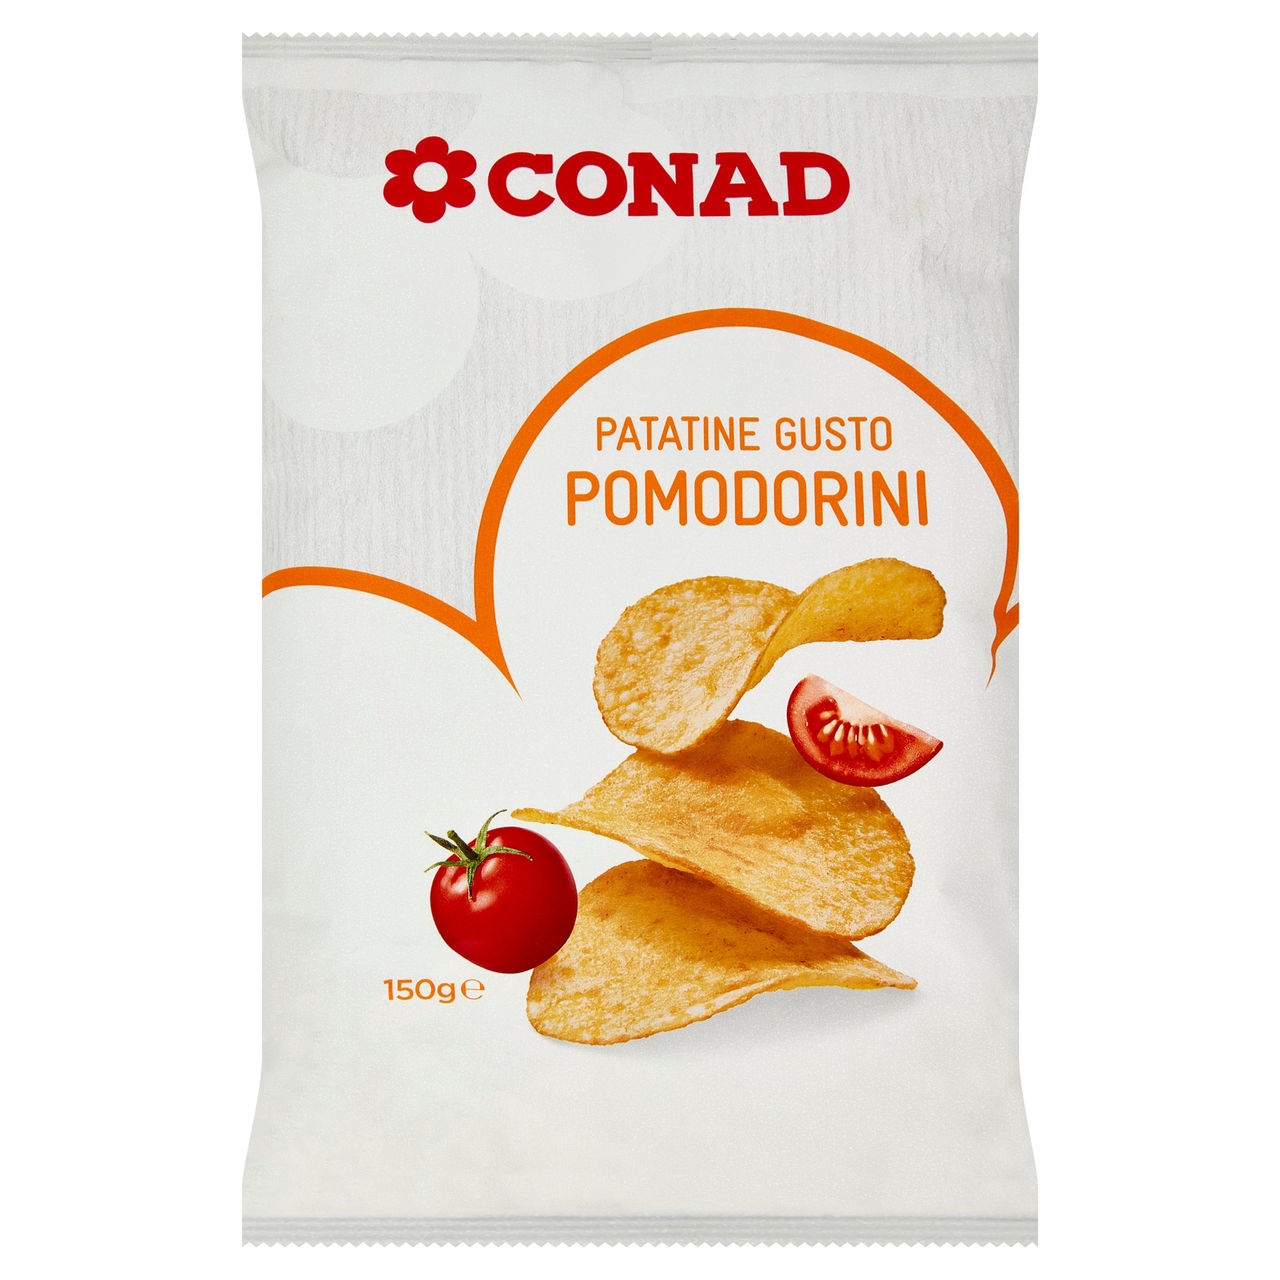 Patatine Gusto Pomodorini Conad in vendita online